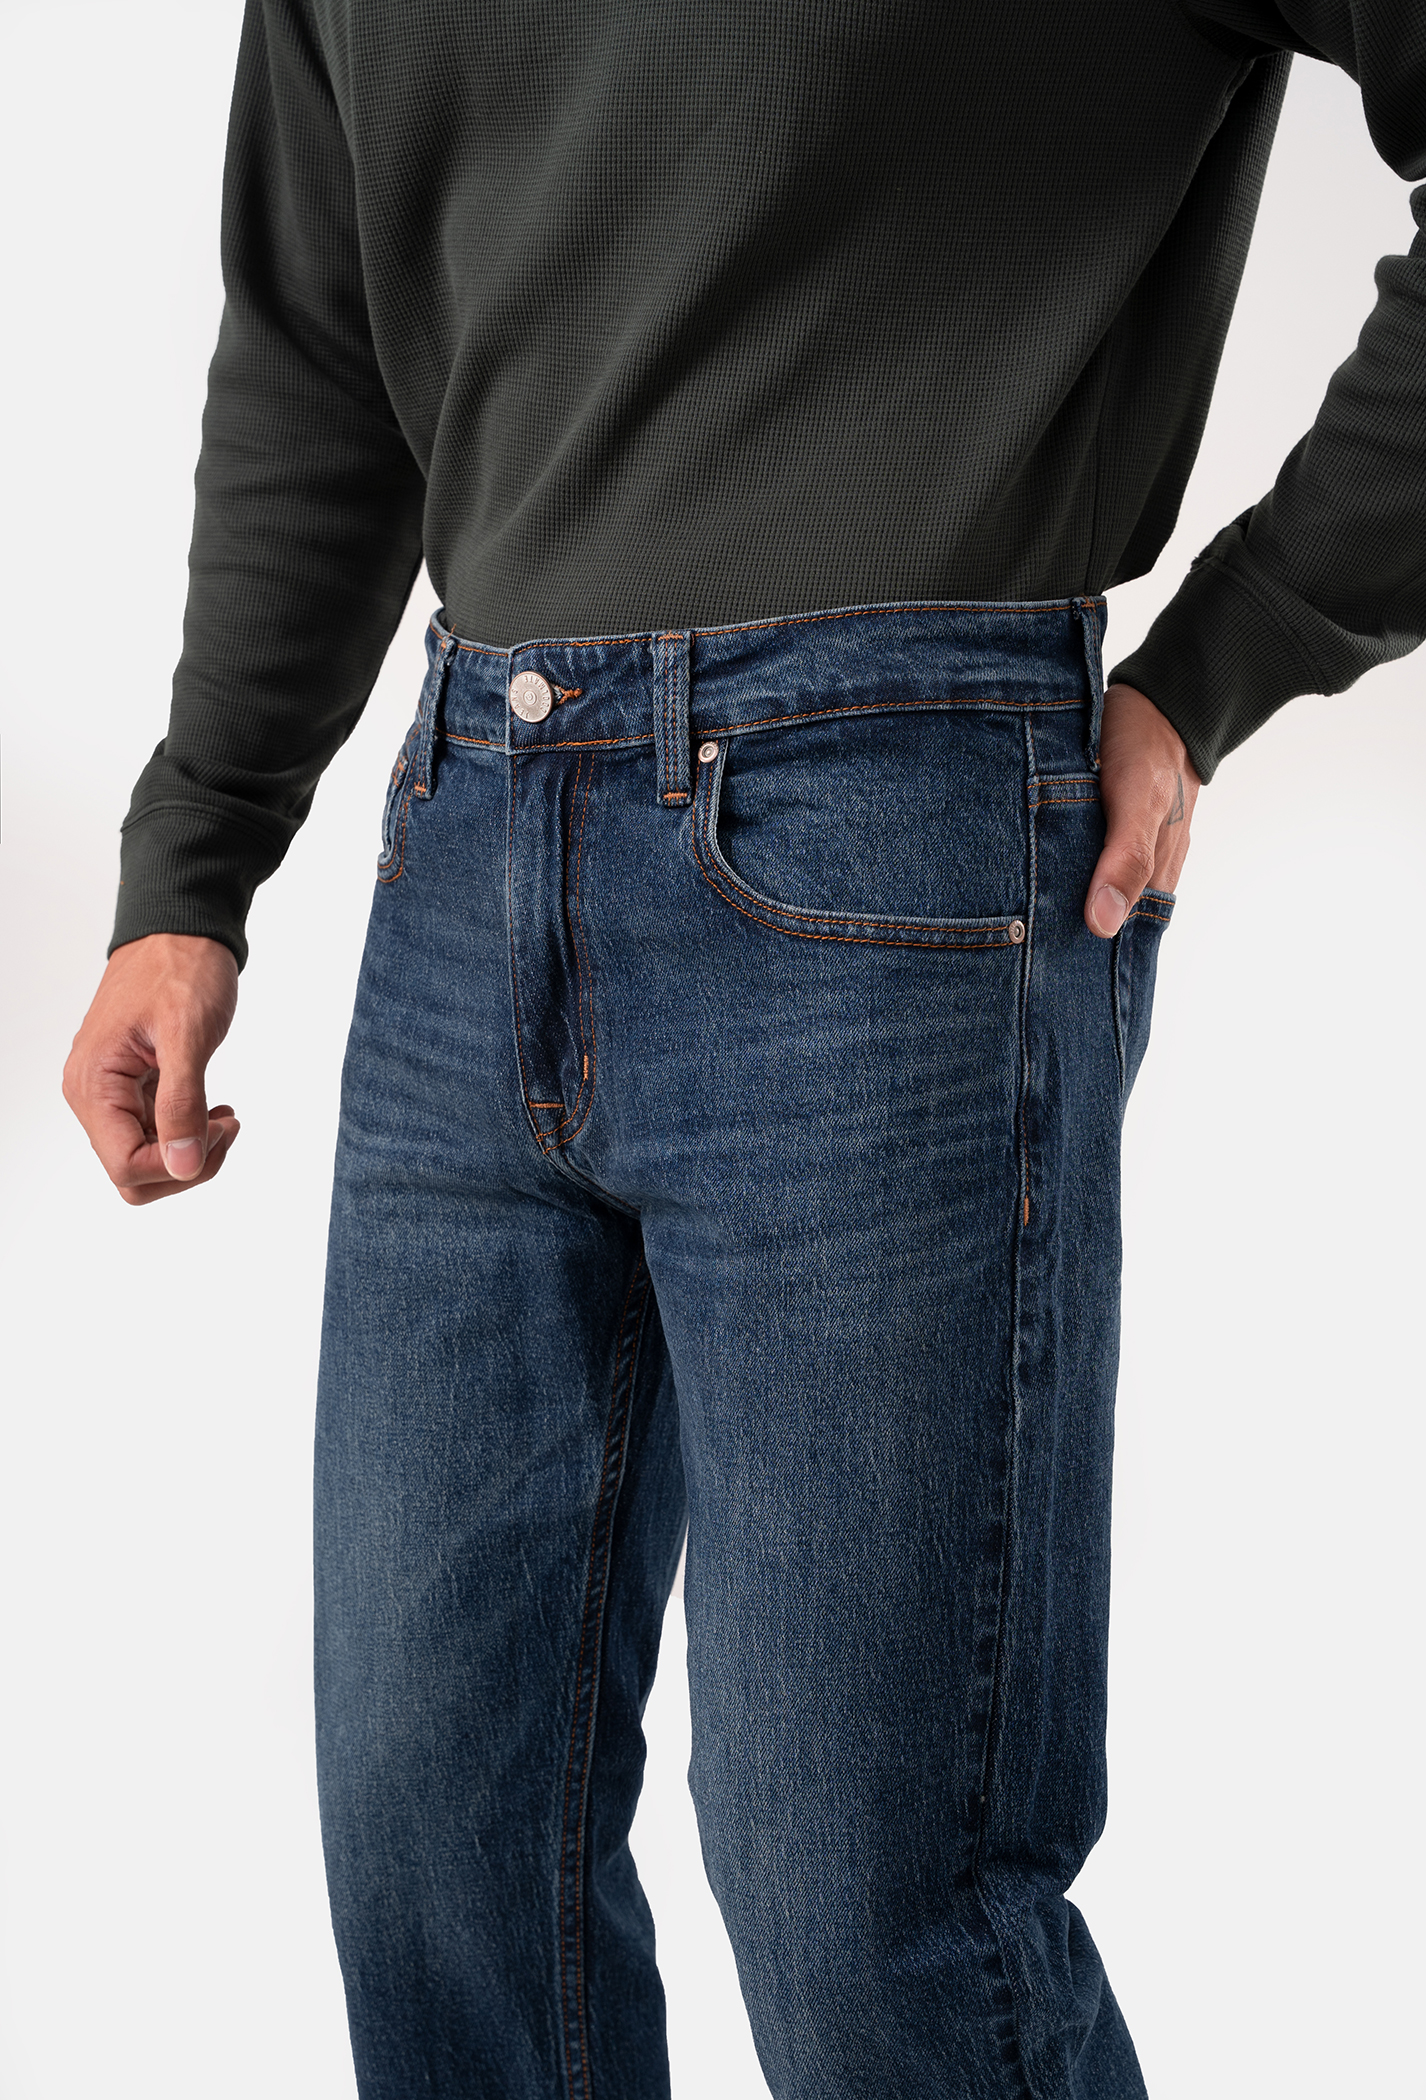 FLASH SALE - Quần Jeans Clean Denim dáng Regular S3 Xanh đậm 4